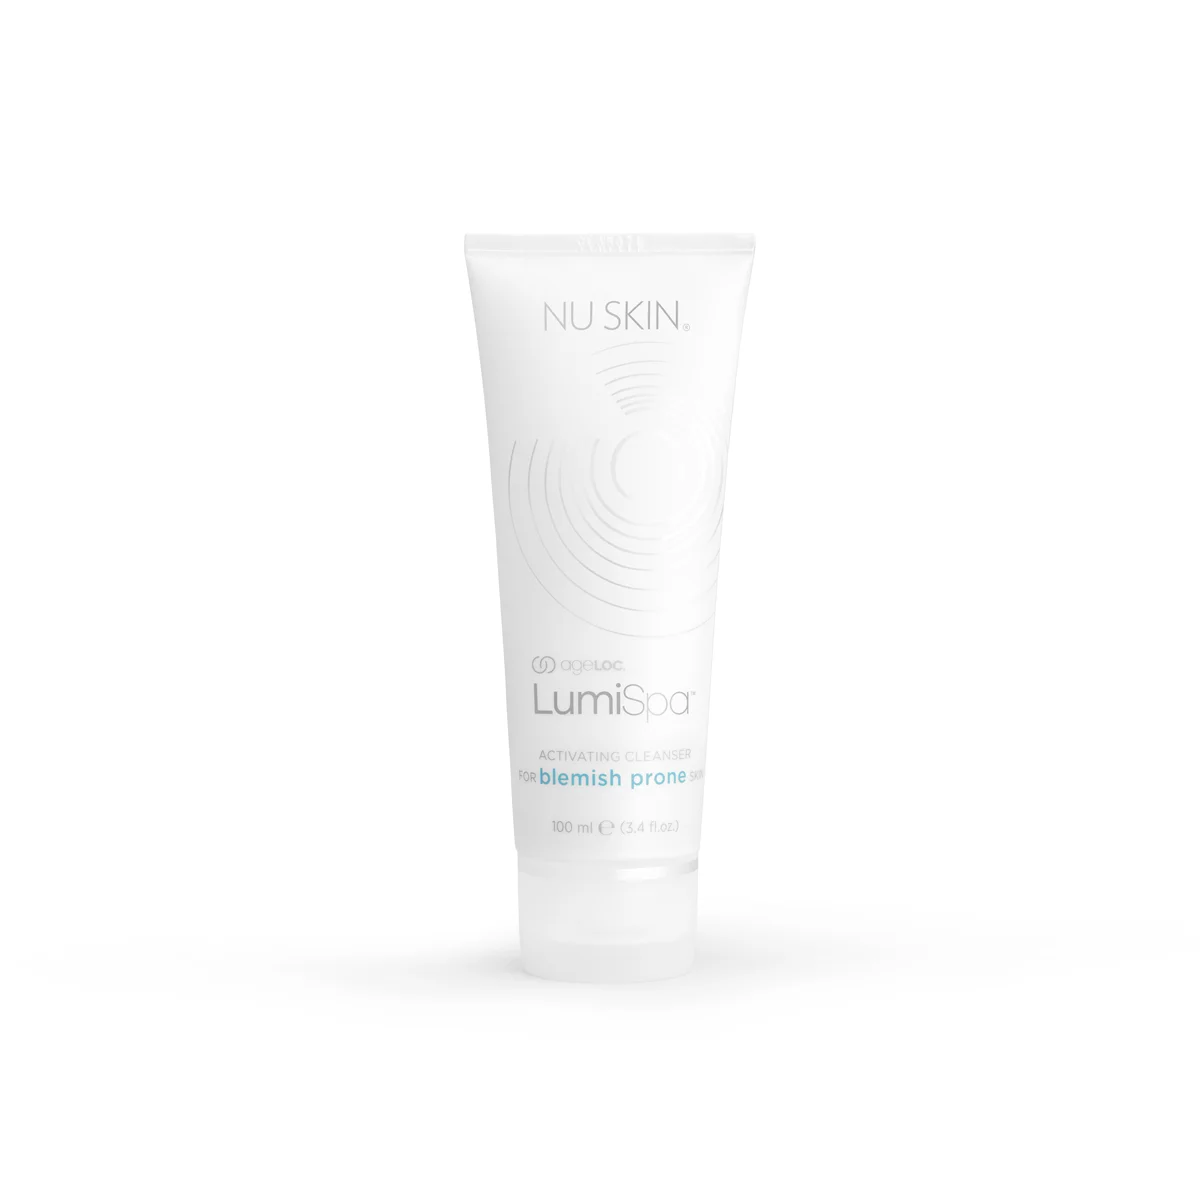 Nu Skin ageLOC LumiSpa Activating Cleanser - Unreine Haut 100 ml